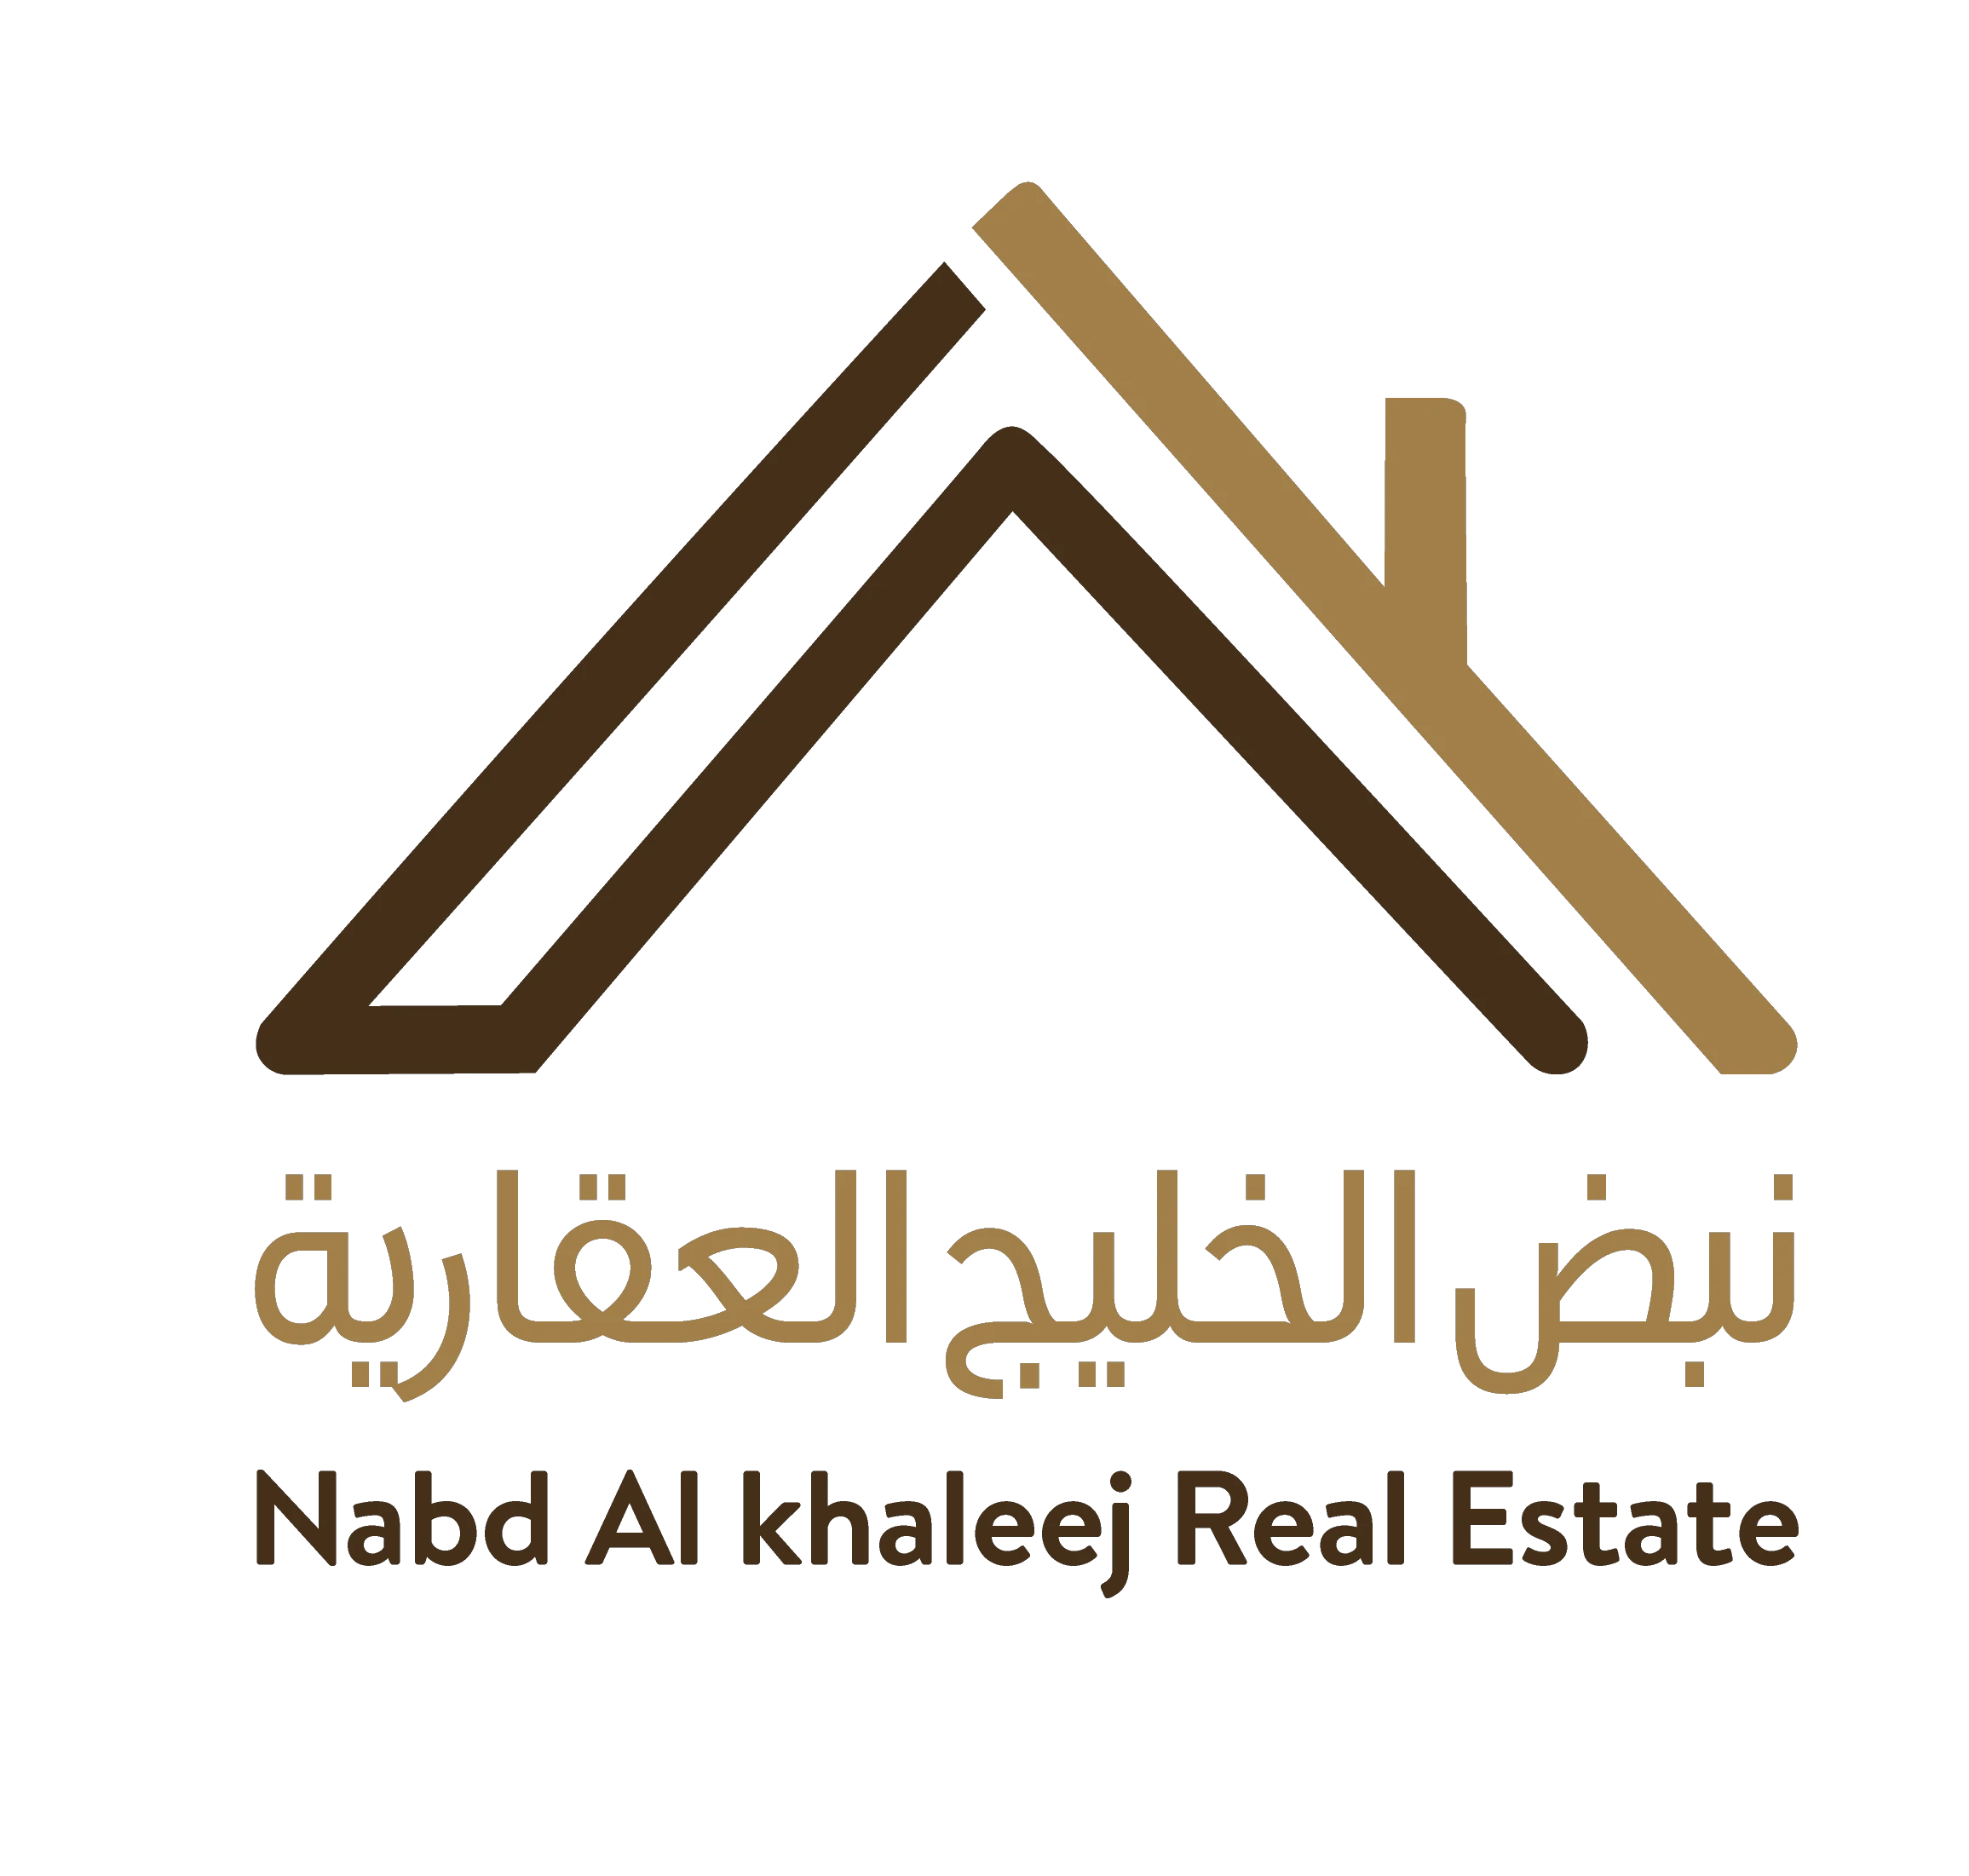 Nabd-Al-khaleej-Real-Estate2-